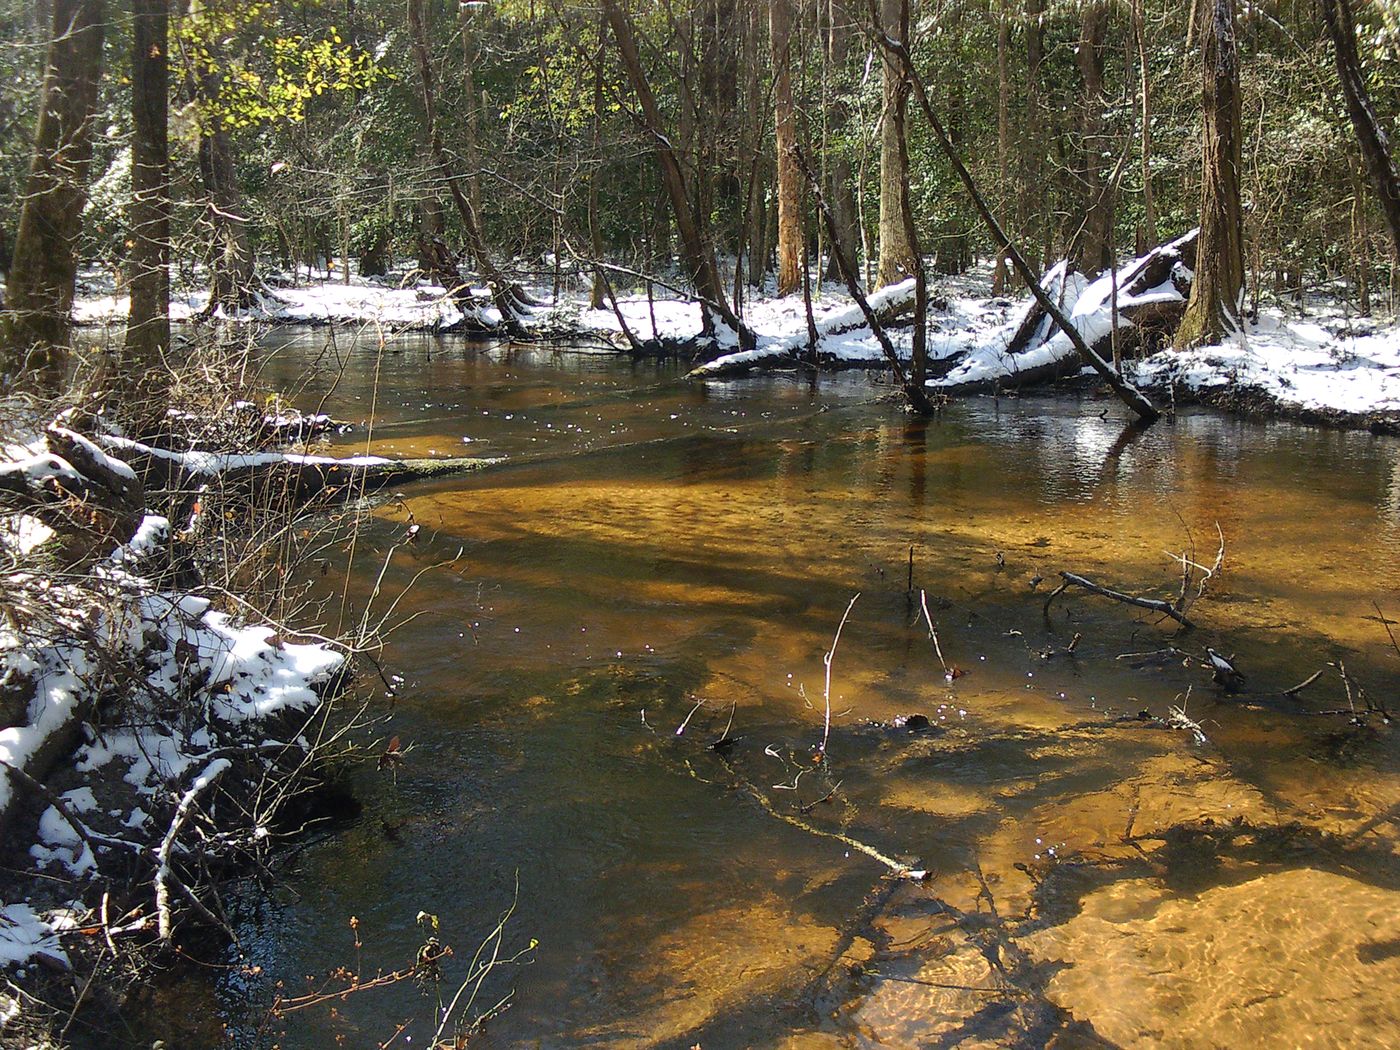 Tinker Creek, one of 11 sites surveyed